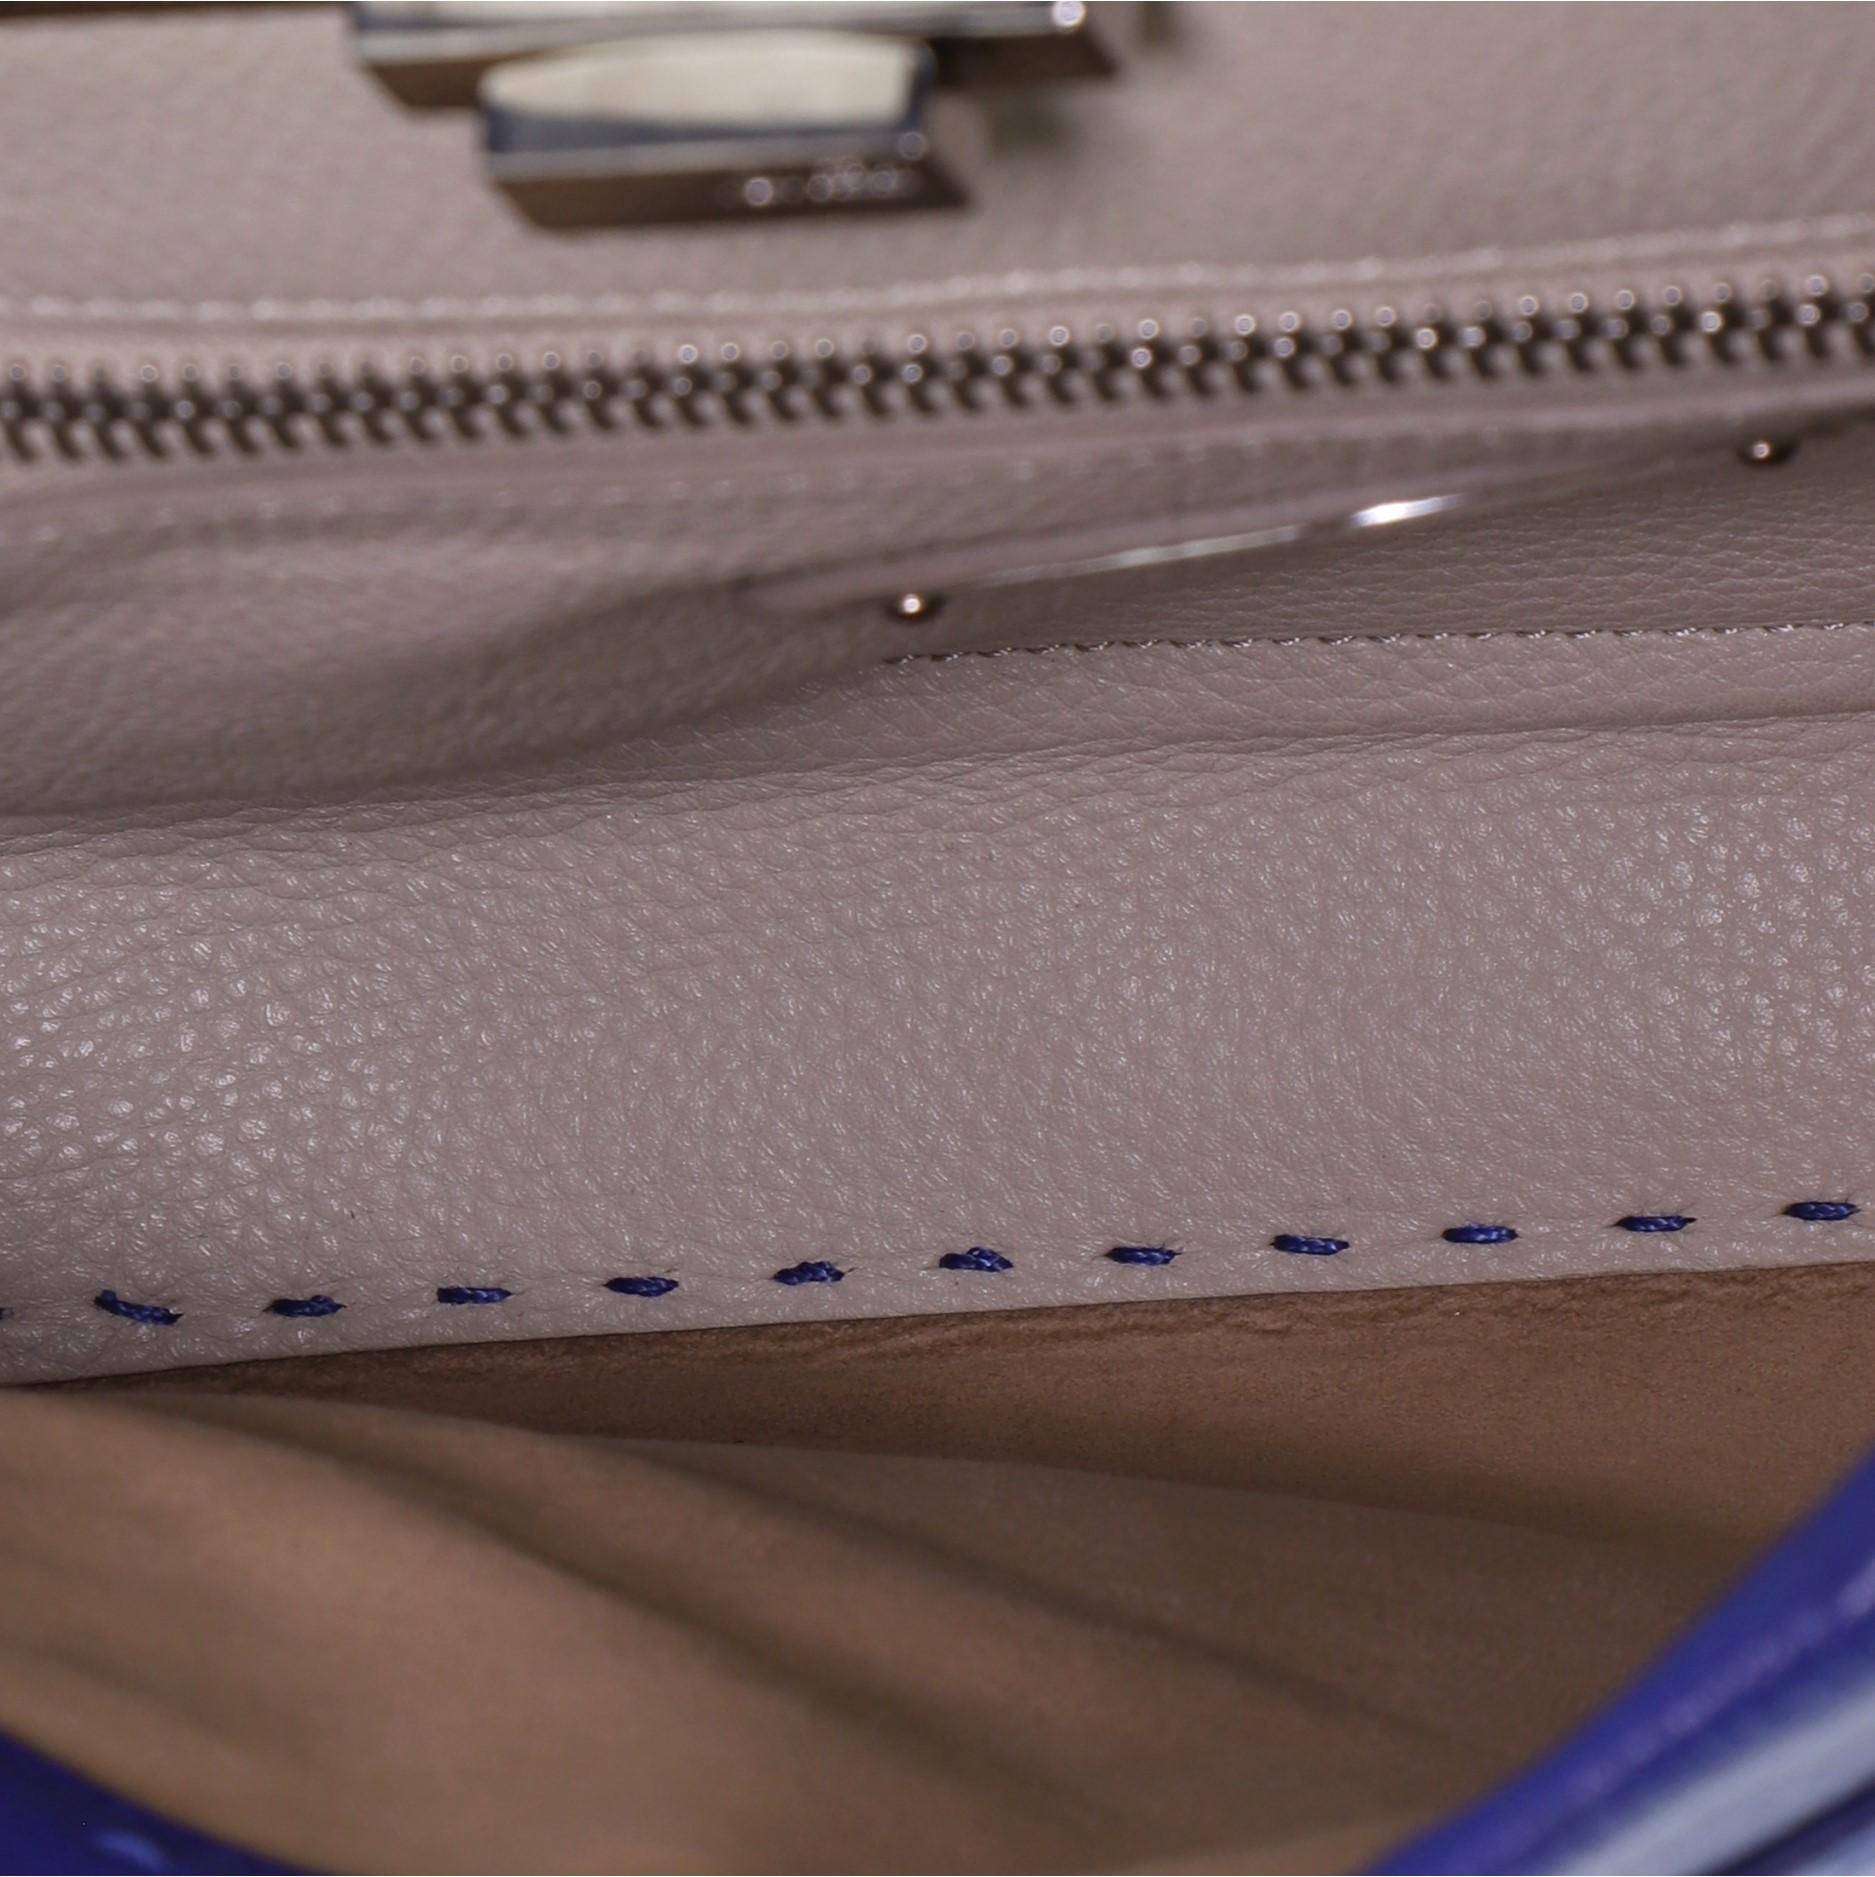 Fendi Selleria Peekaboo Bag Rigid Leather Regular In Good Condition In NY, NY